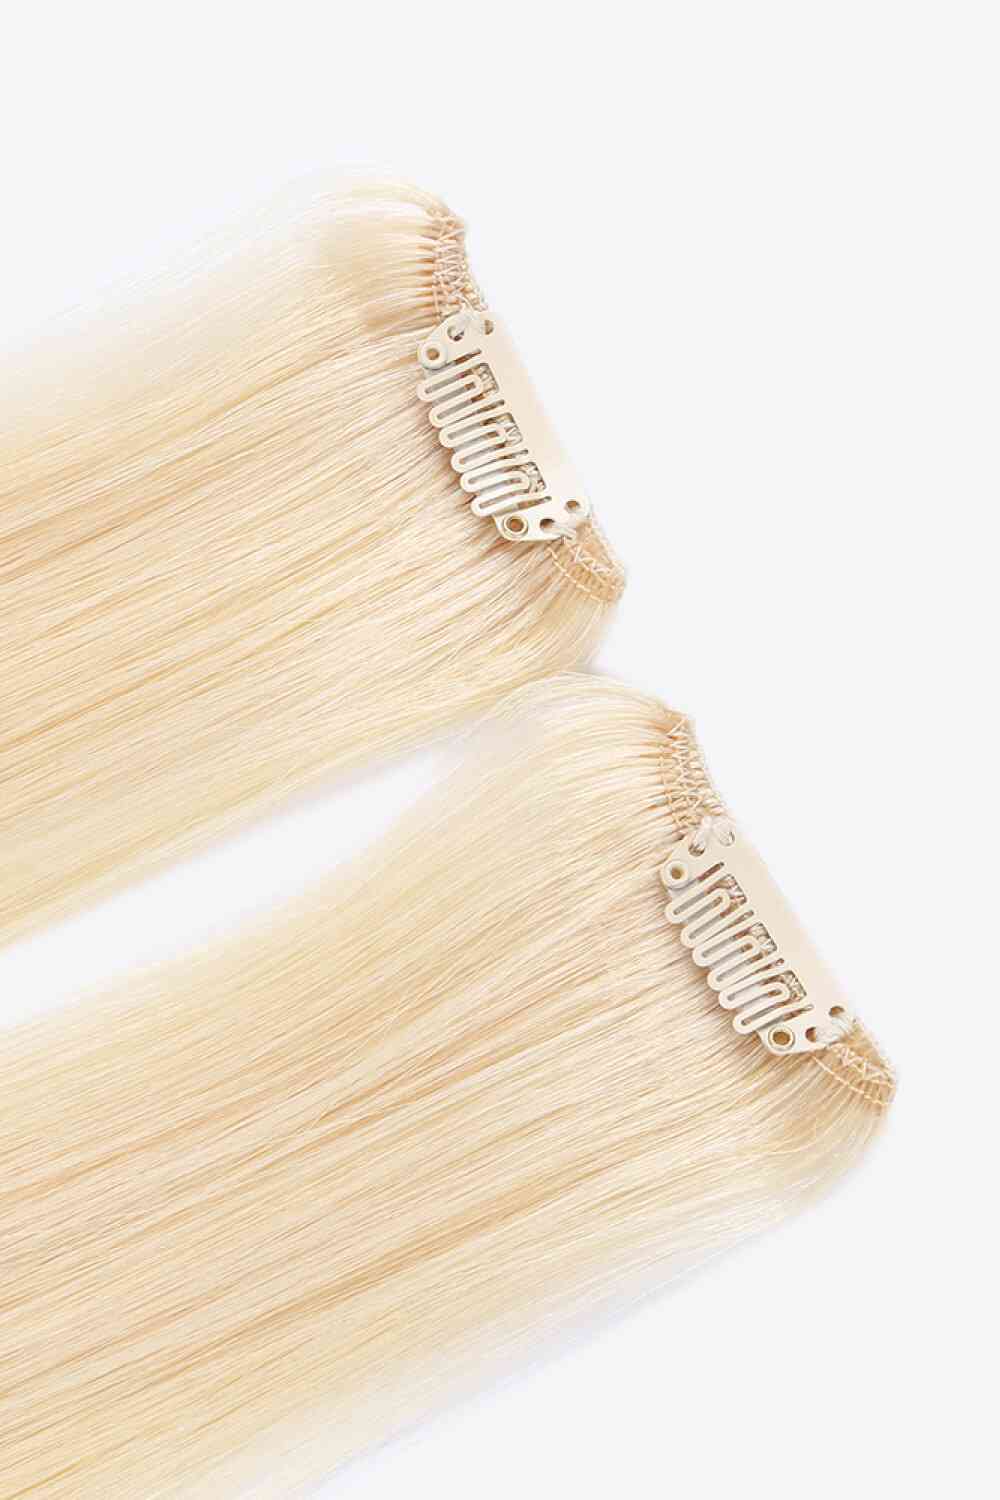 Virgin Human Hair Extensions | 18” | Blonde